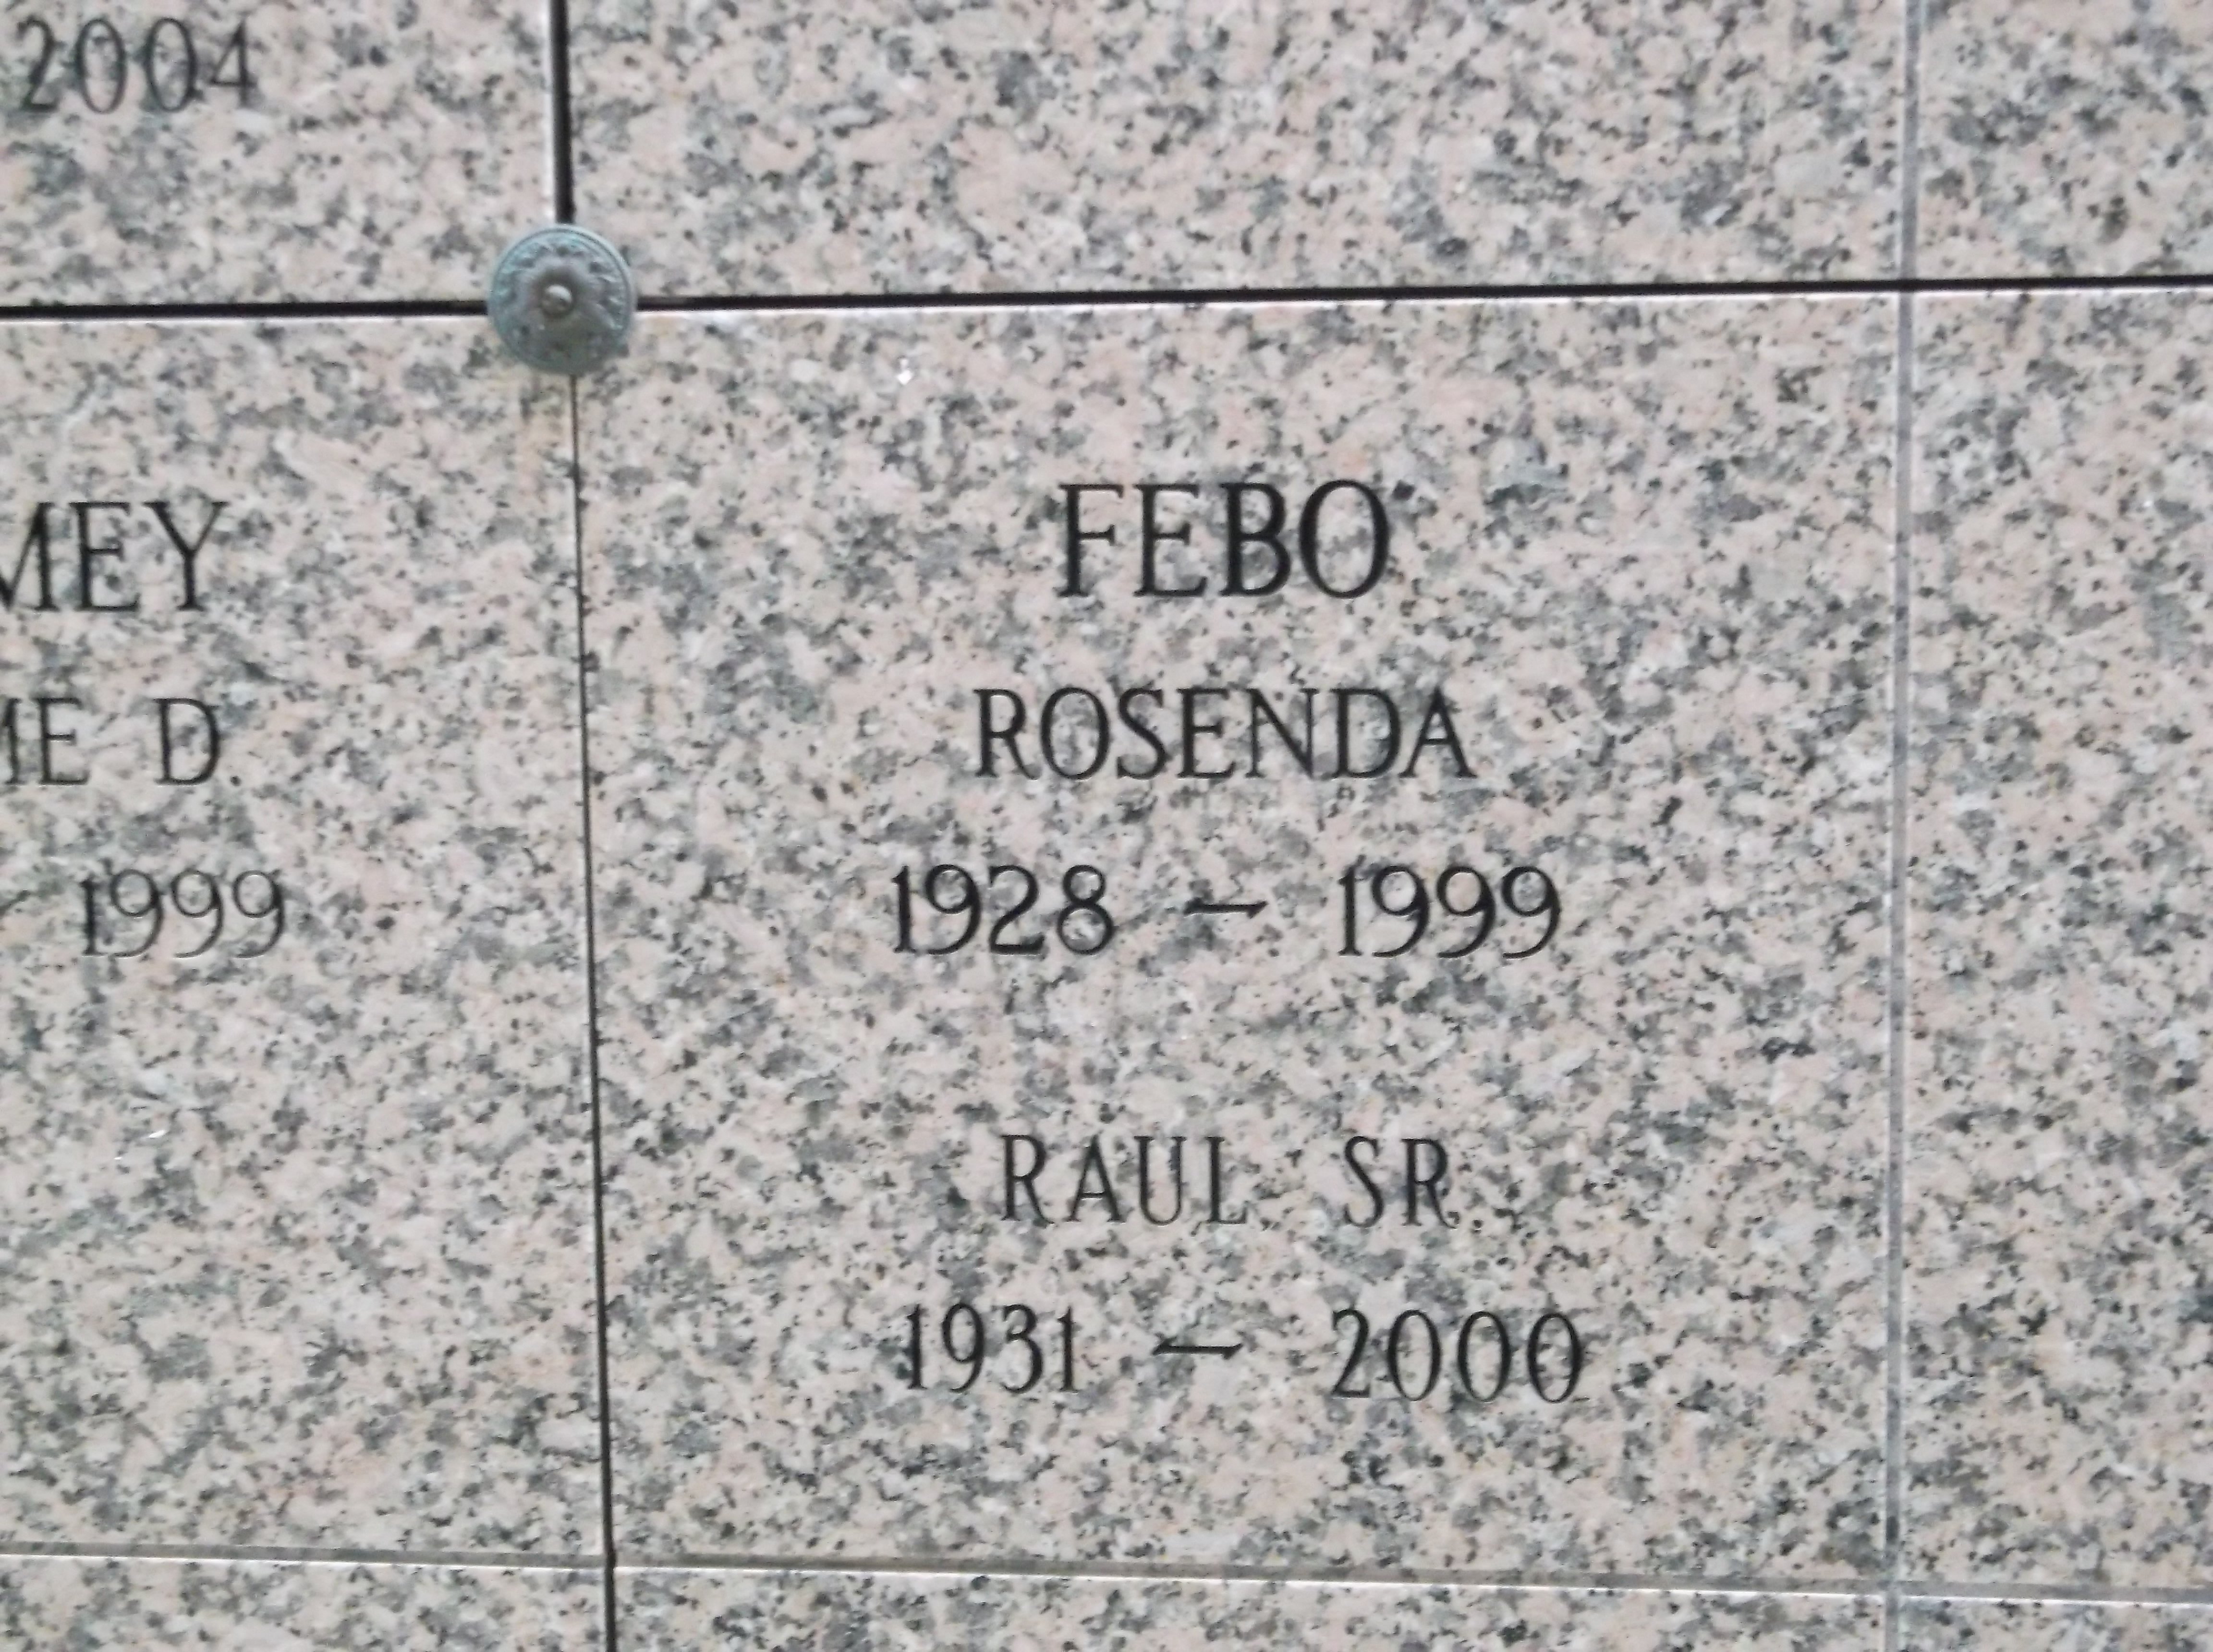 Rosenda Febo